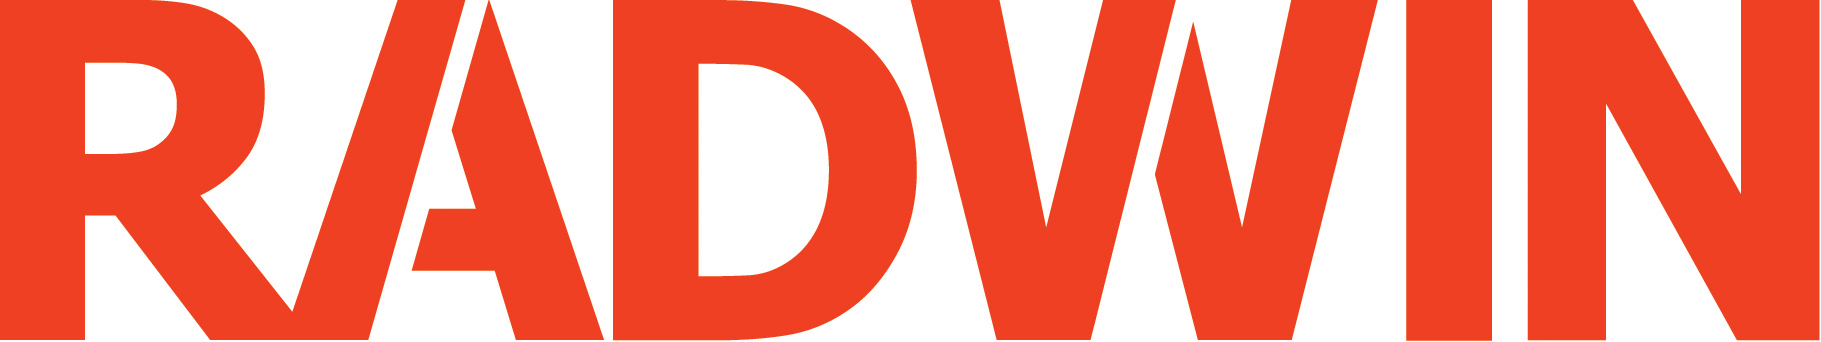 Radwin Logo photo - 1